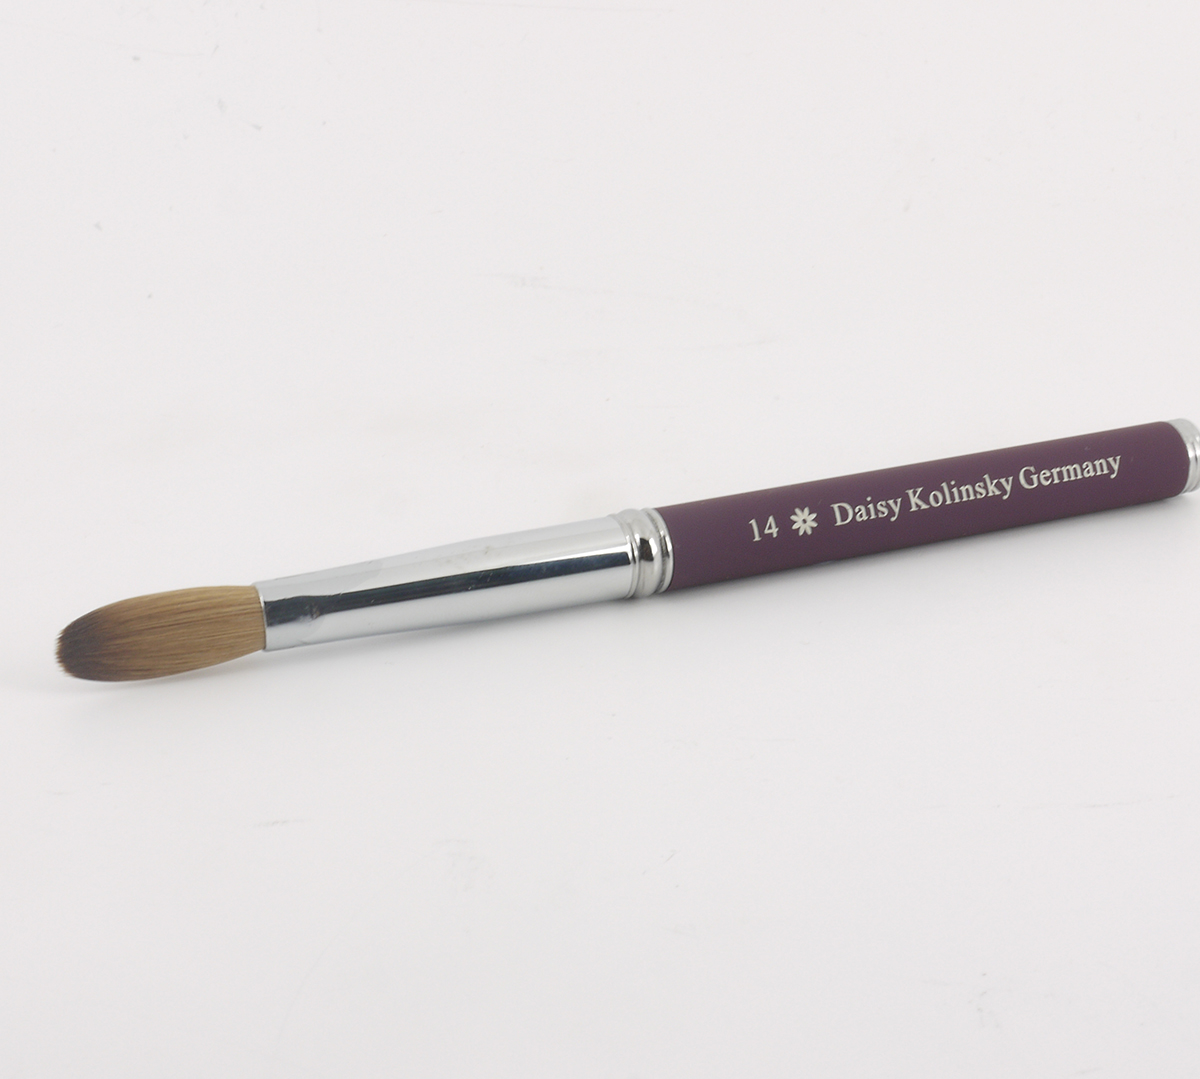 Daisy Kolinsky Acrylic Brush 14 Hollywood Nails Supply Uk